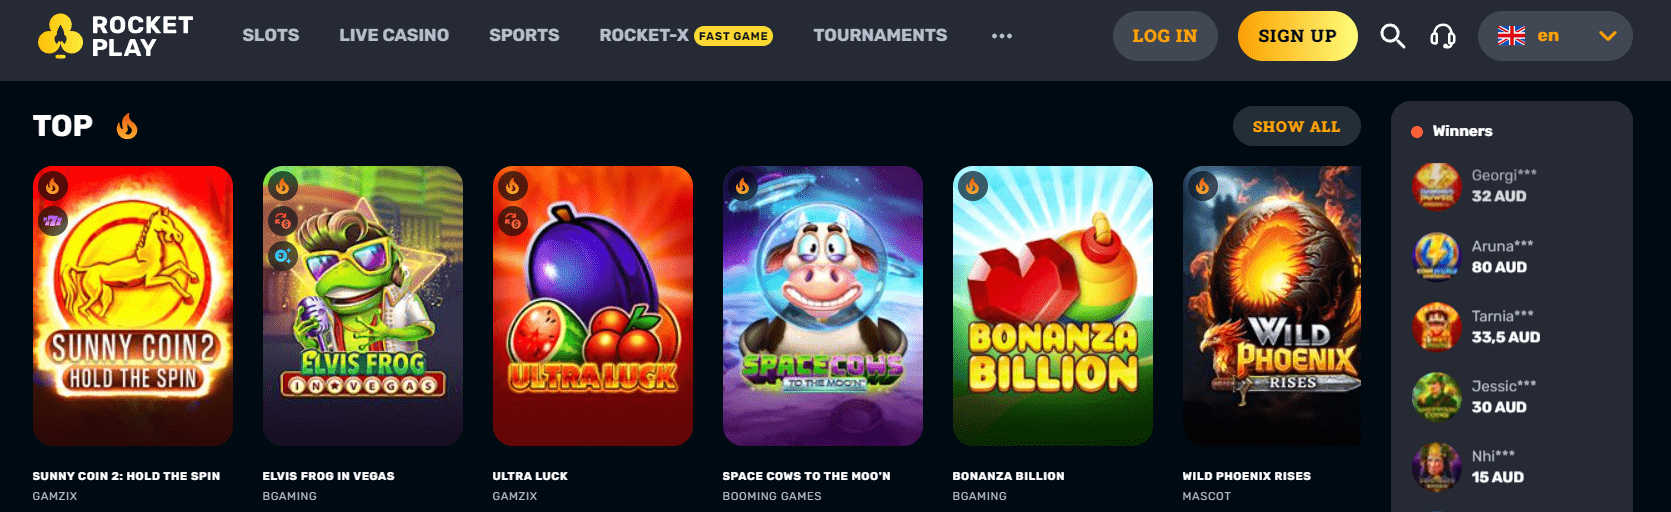 Best Game RocketPlay Casino 